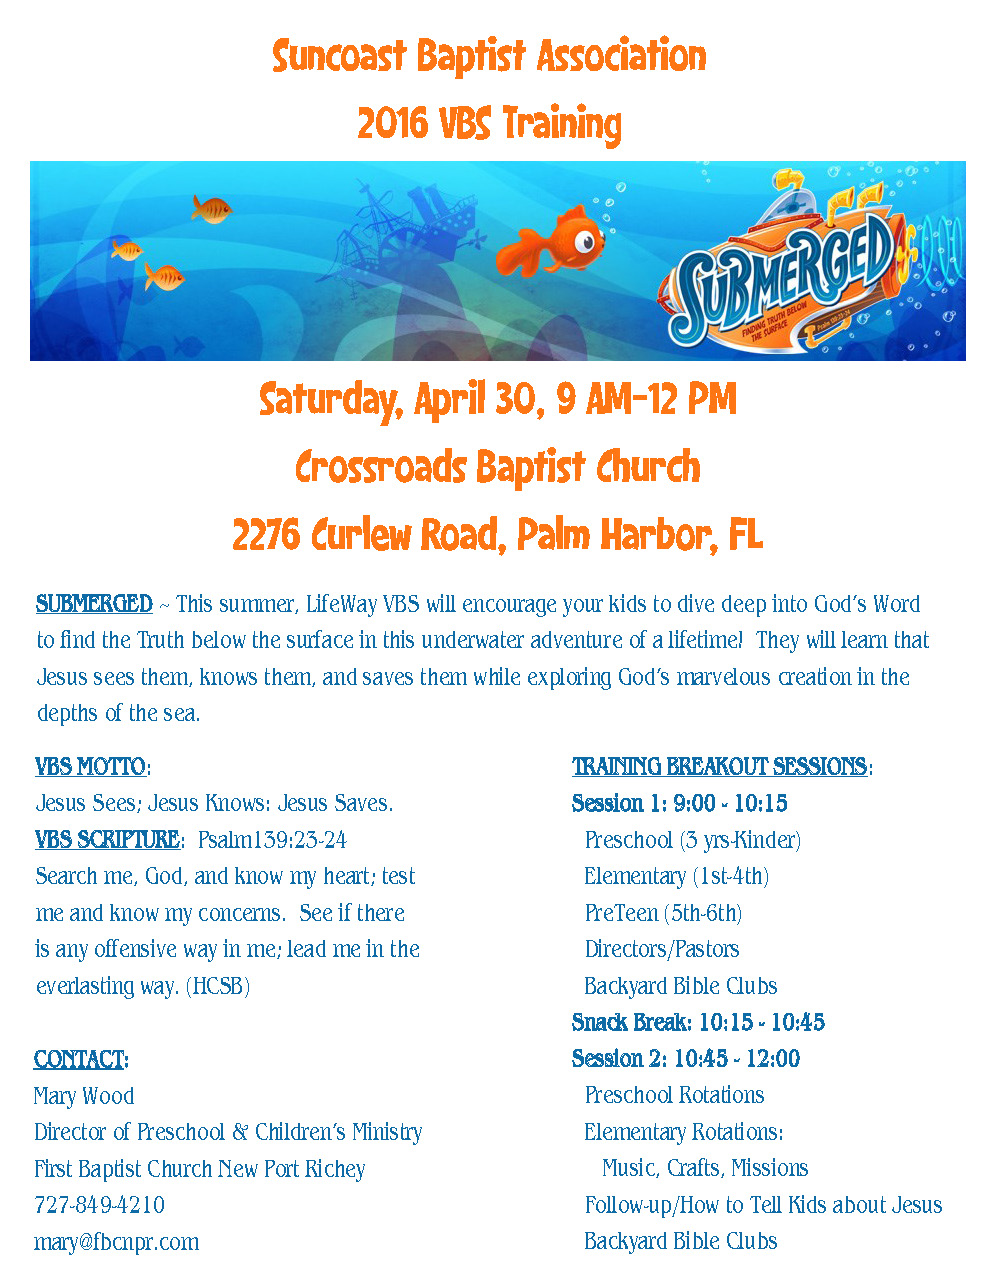 VBS 2016 association training flyer (3) Florida Baptist Convention FBC